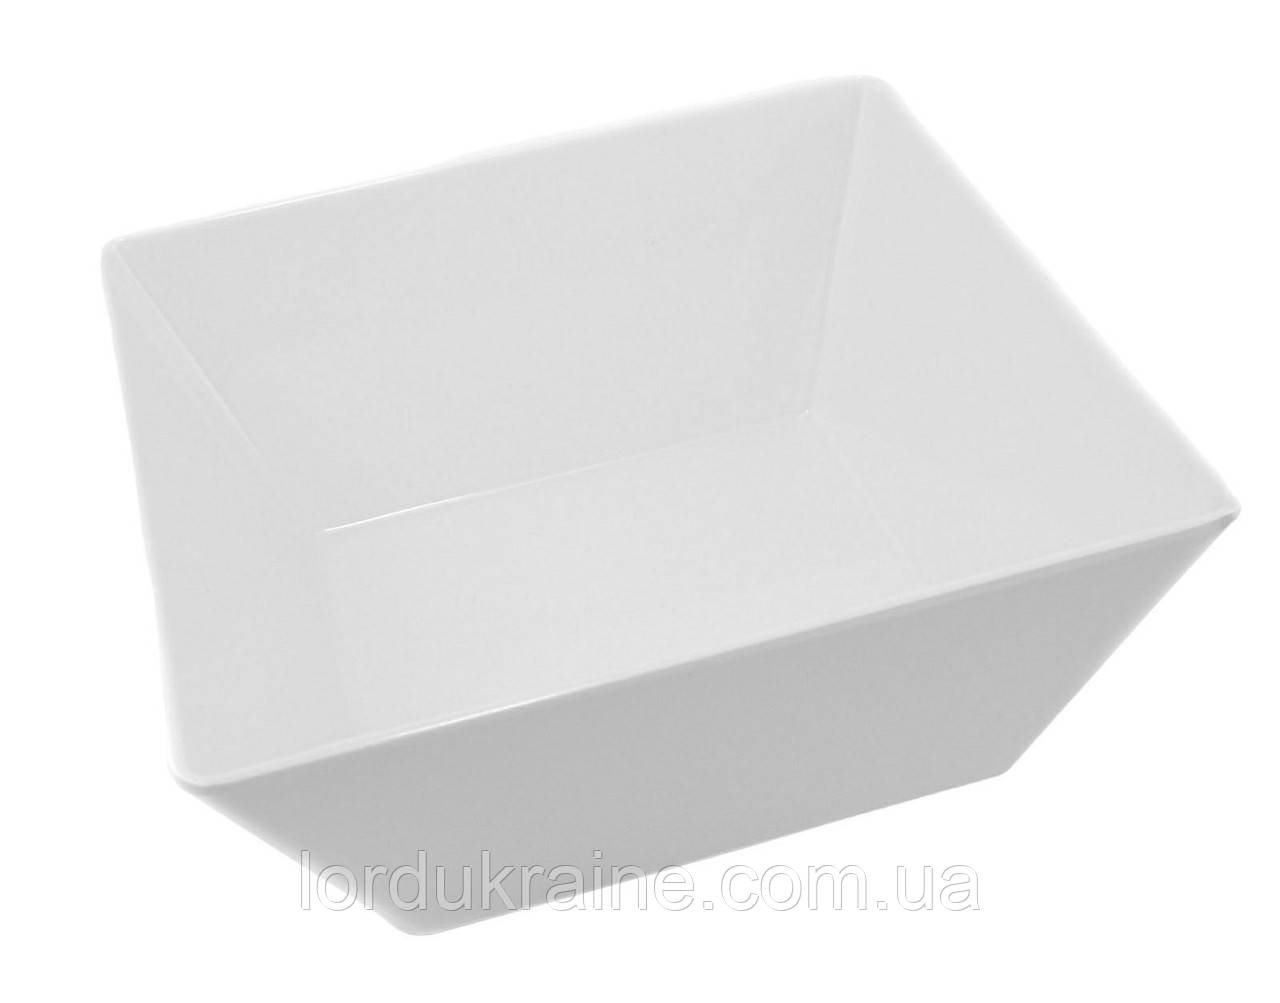 Квадратне глибоке блюдо з меламіну 237 × 237 × 100 мм, біле